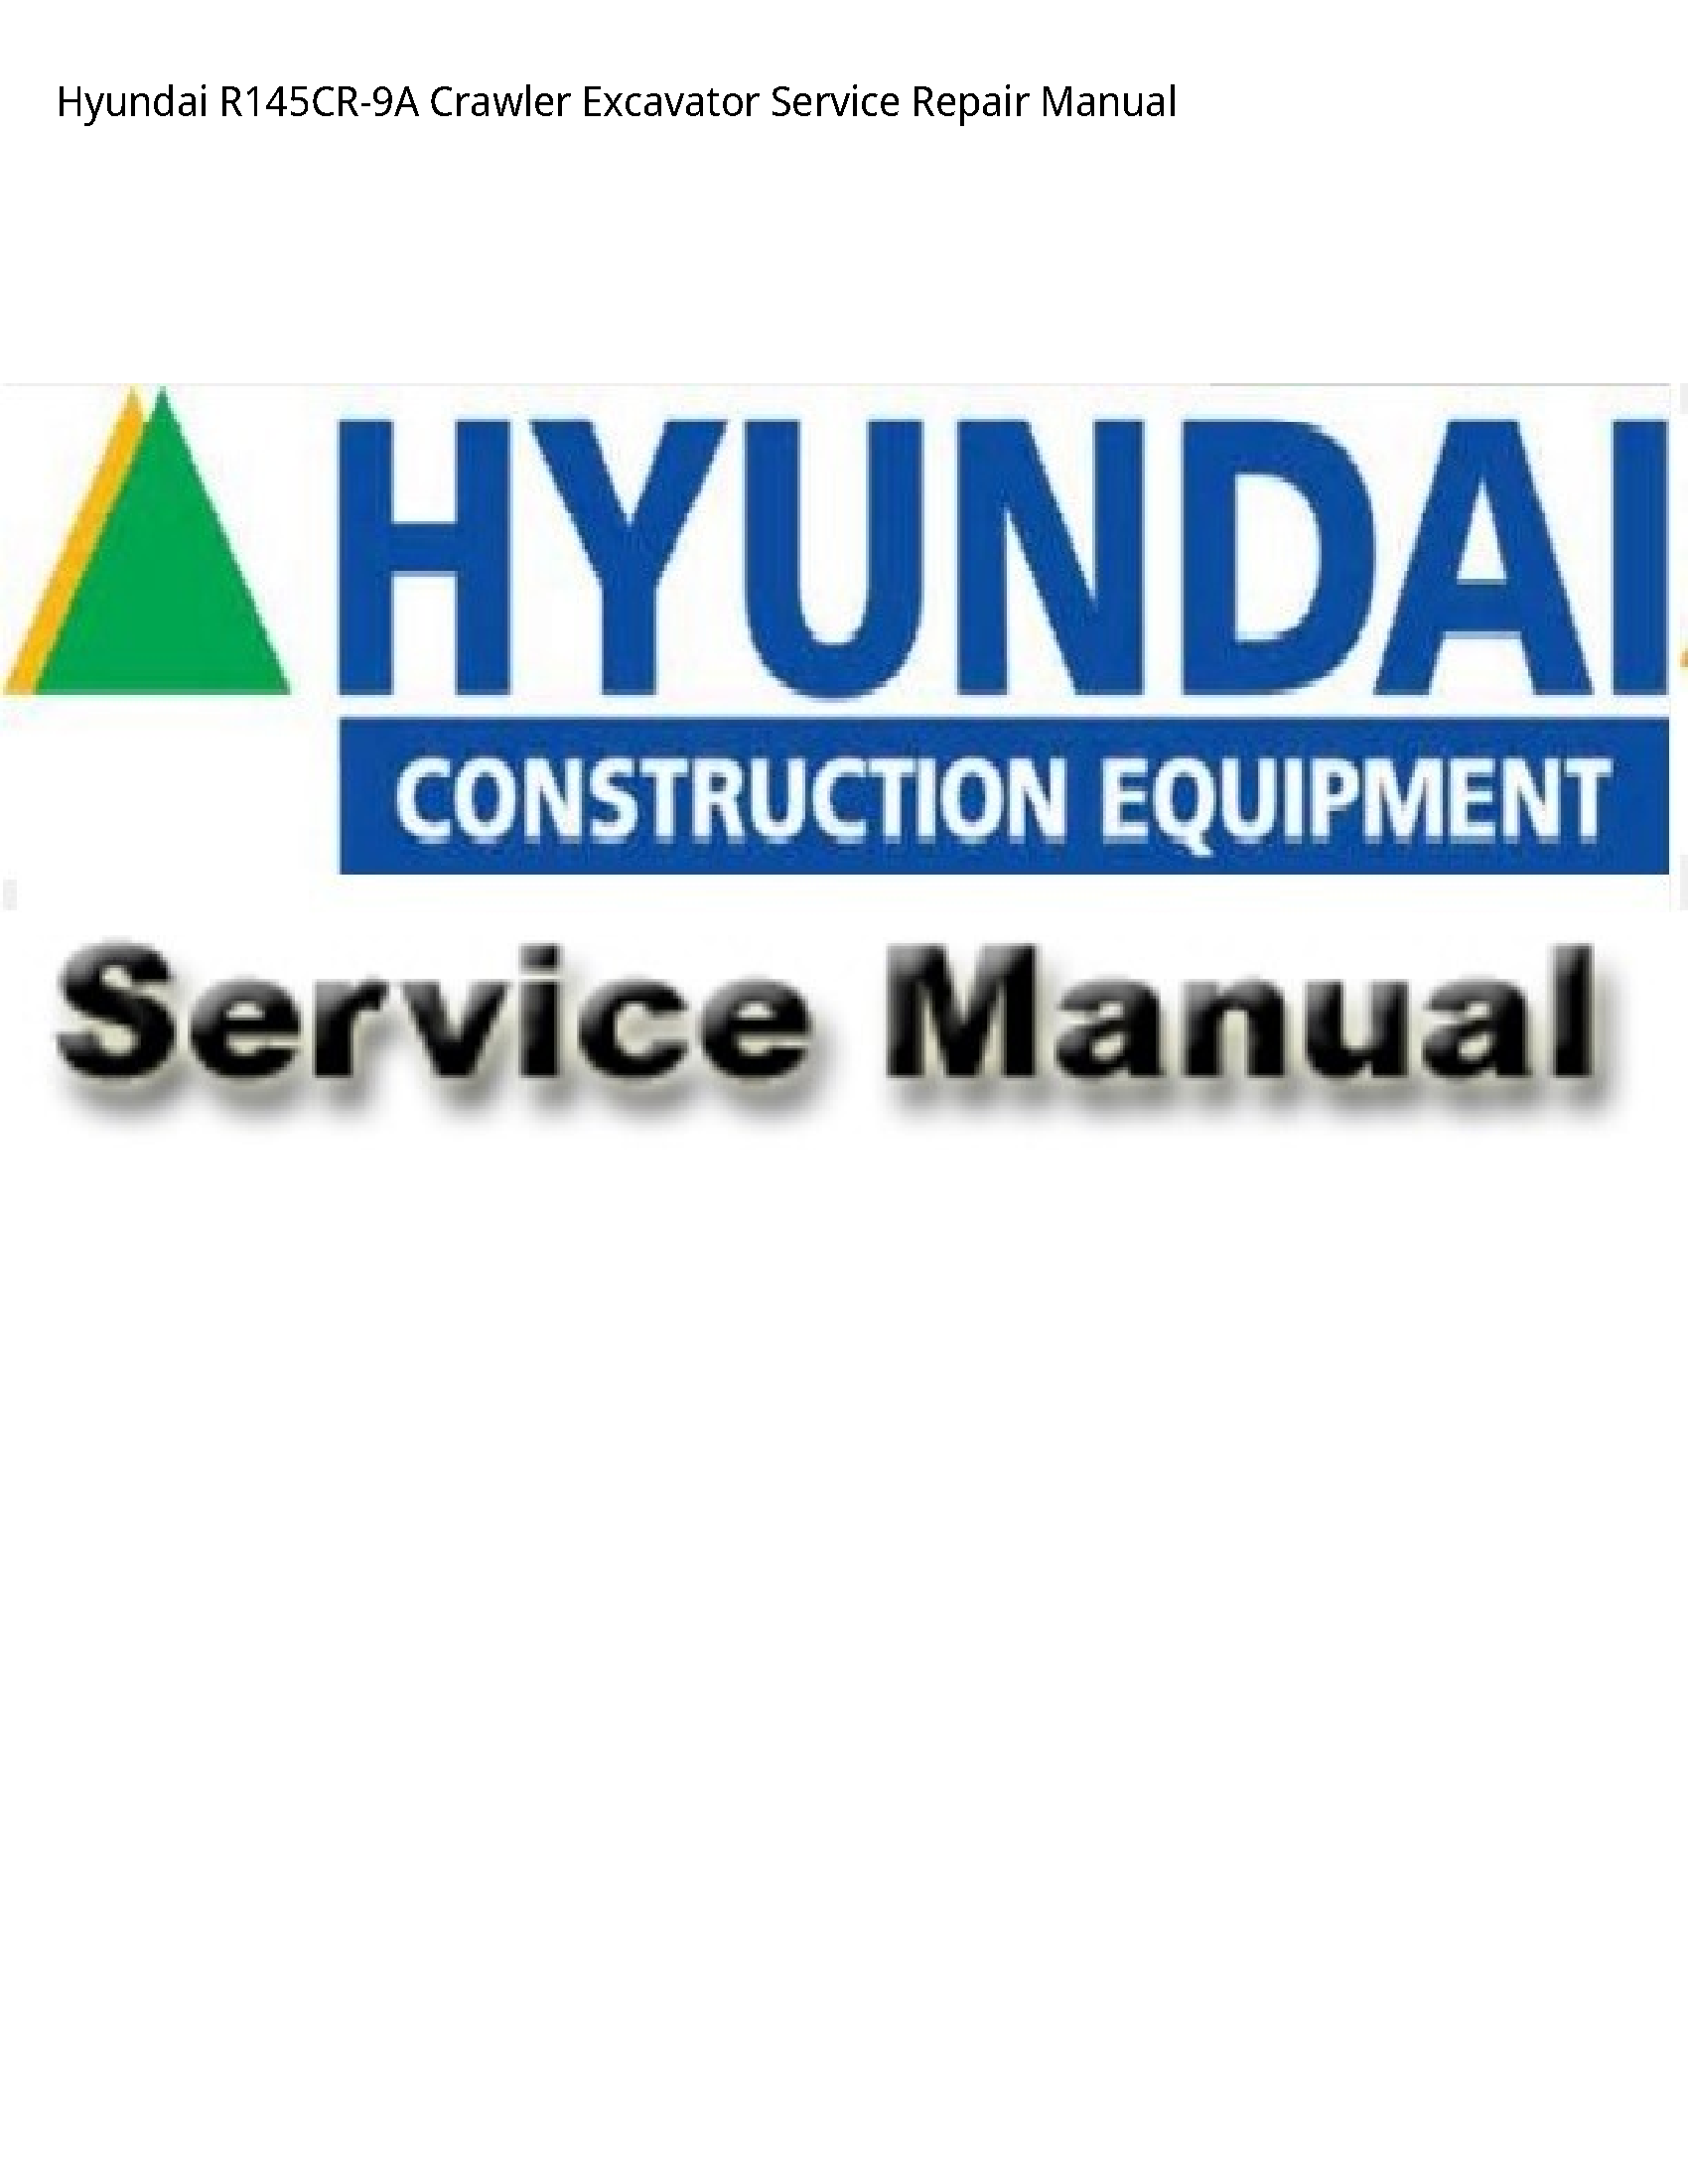 Hyundai R145CR-9A Crawler Excavator manual